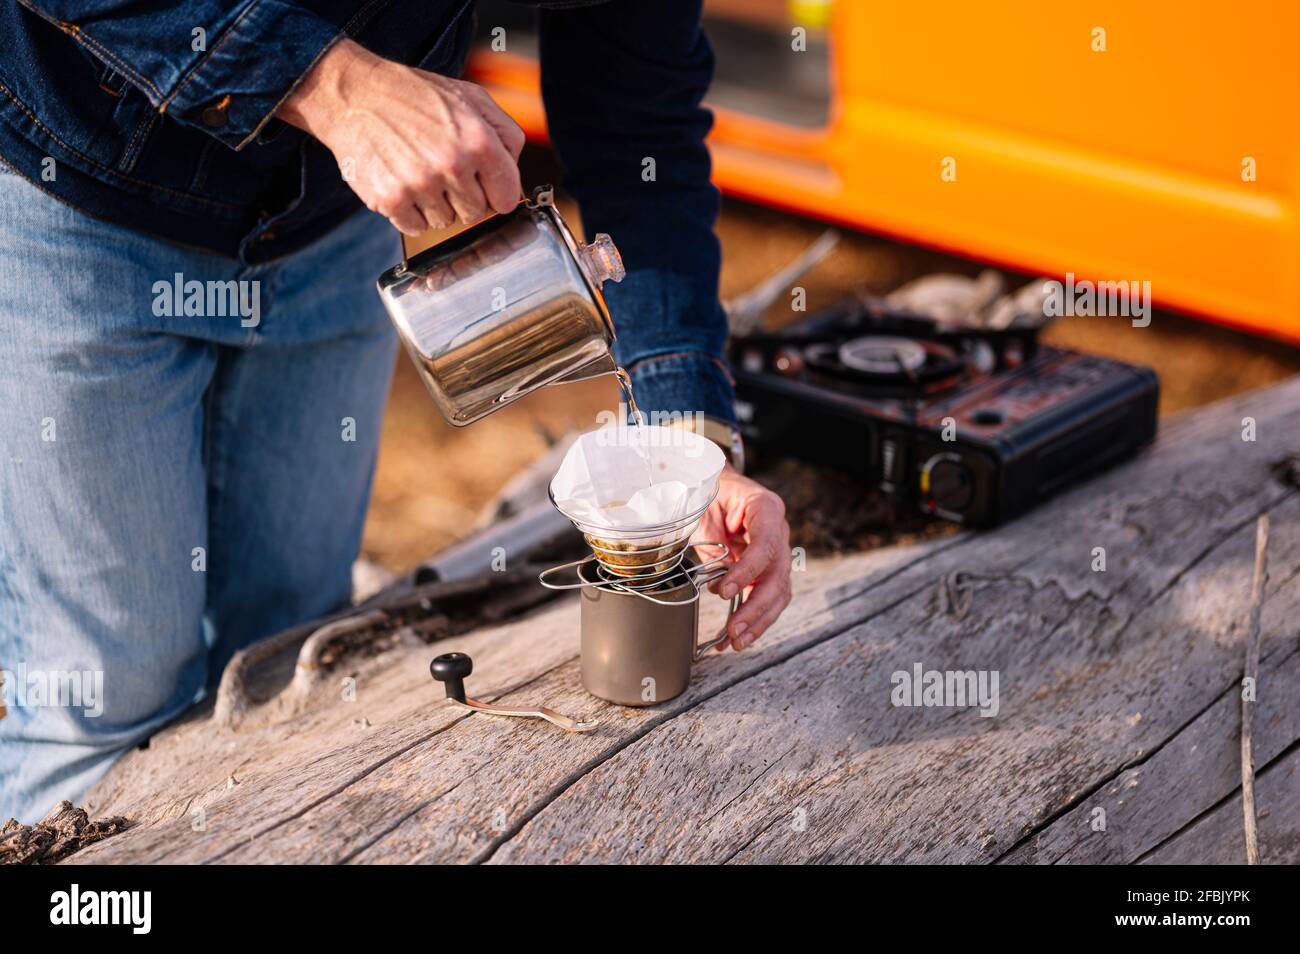 Man pouring water in mug through kettle during camping Stock Photo